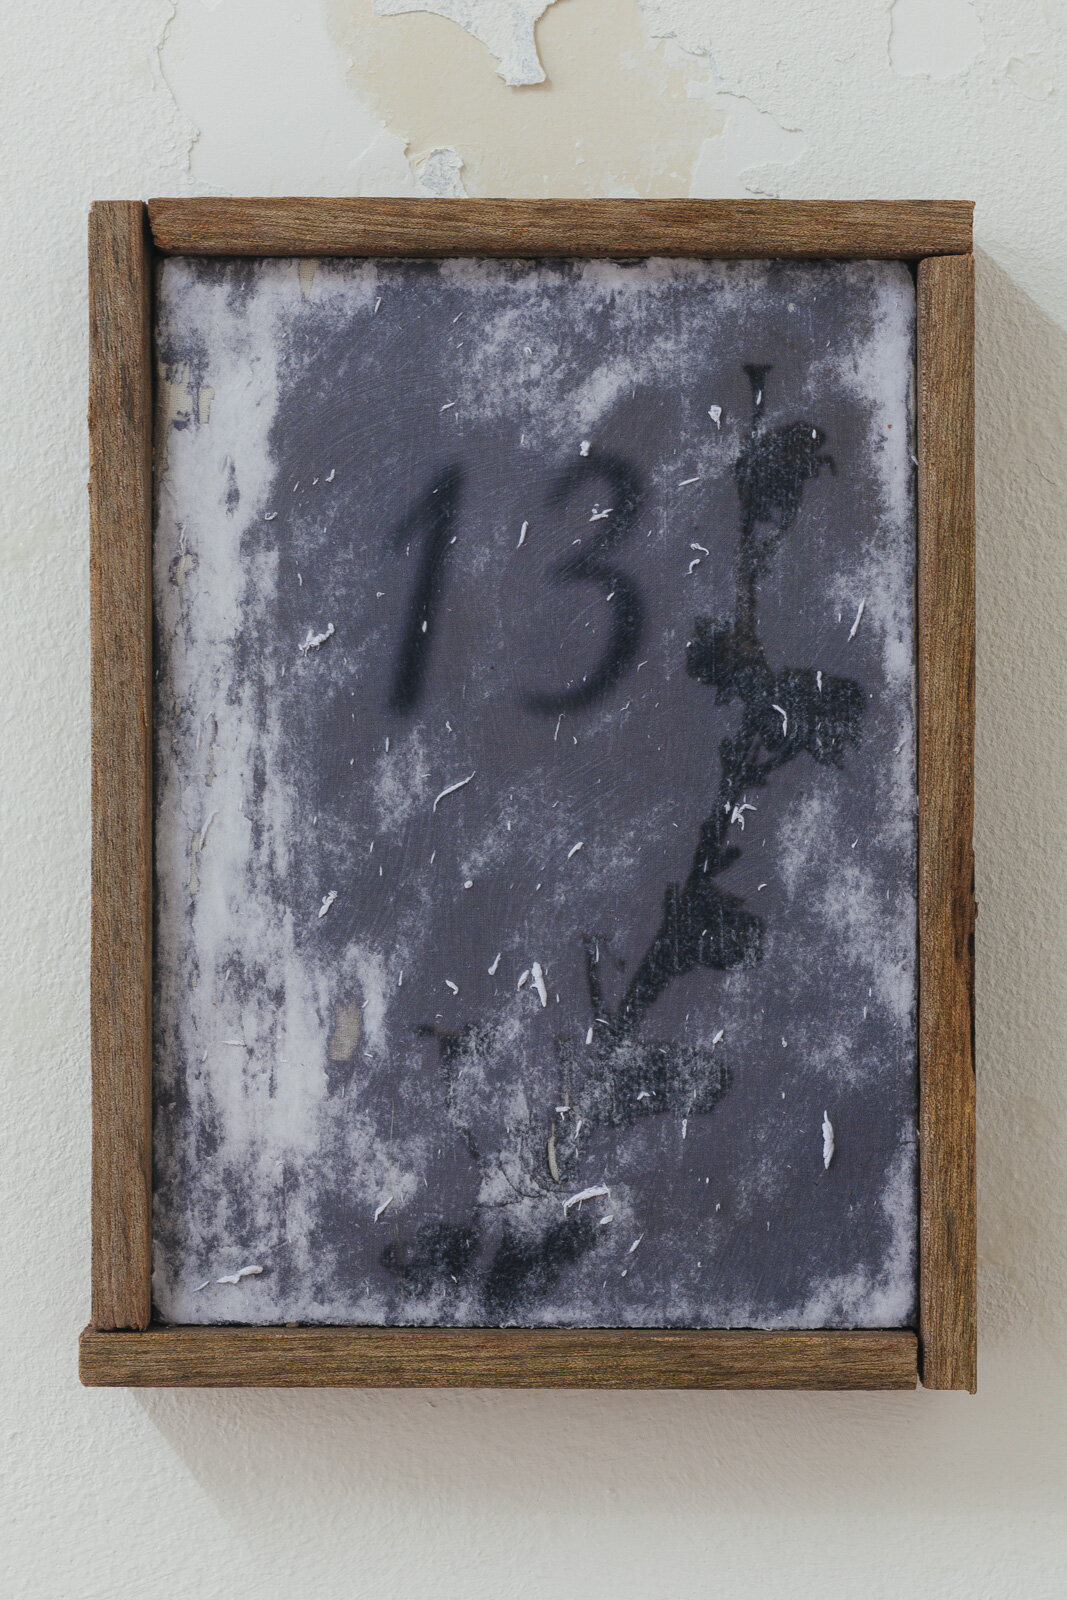  Garrett Lockhart, untitled (13), 2019, laserprint and paper fibres on raw cotton, salvaged wood, 17 x 23 cm. 